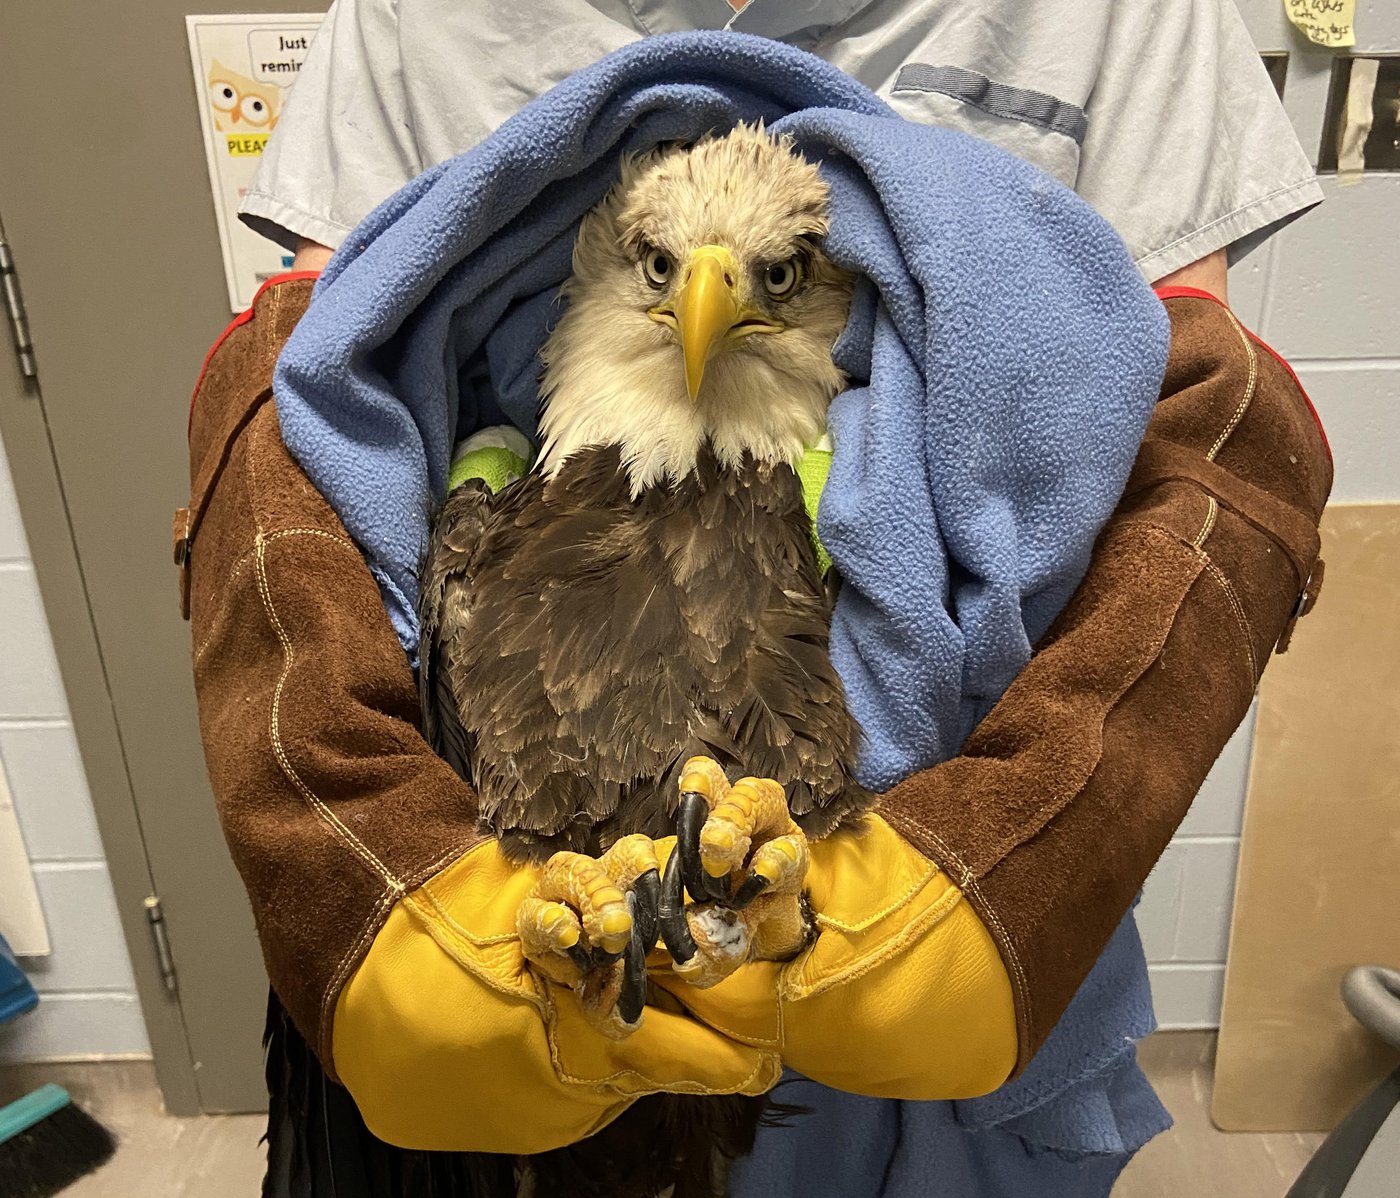 Prince Edward Island bald eagle